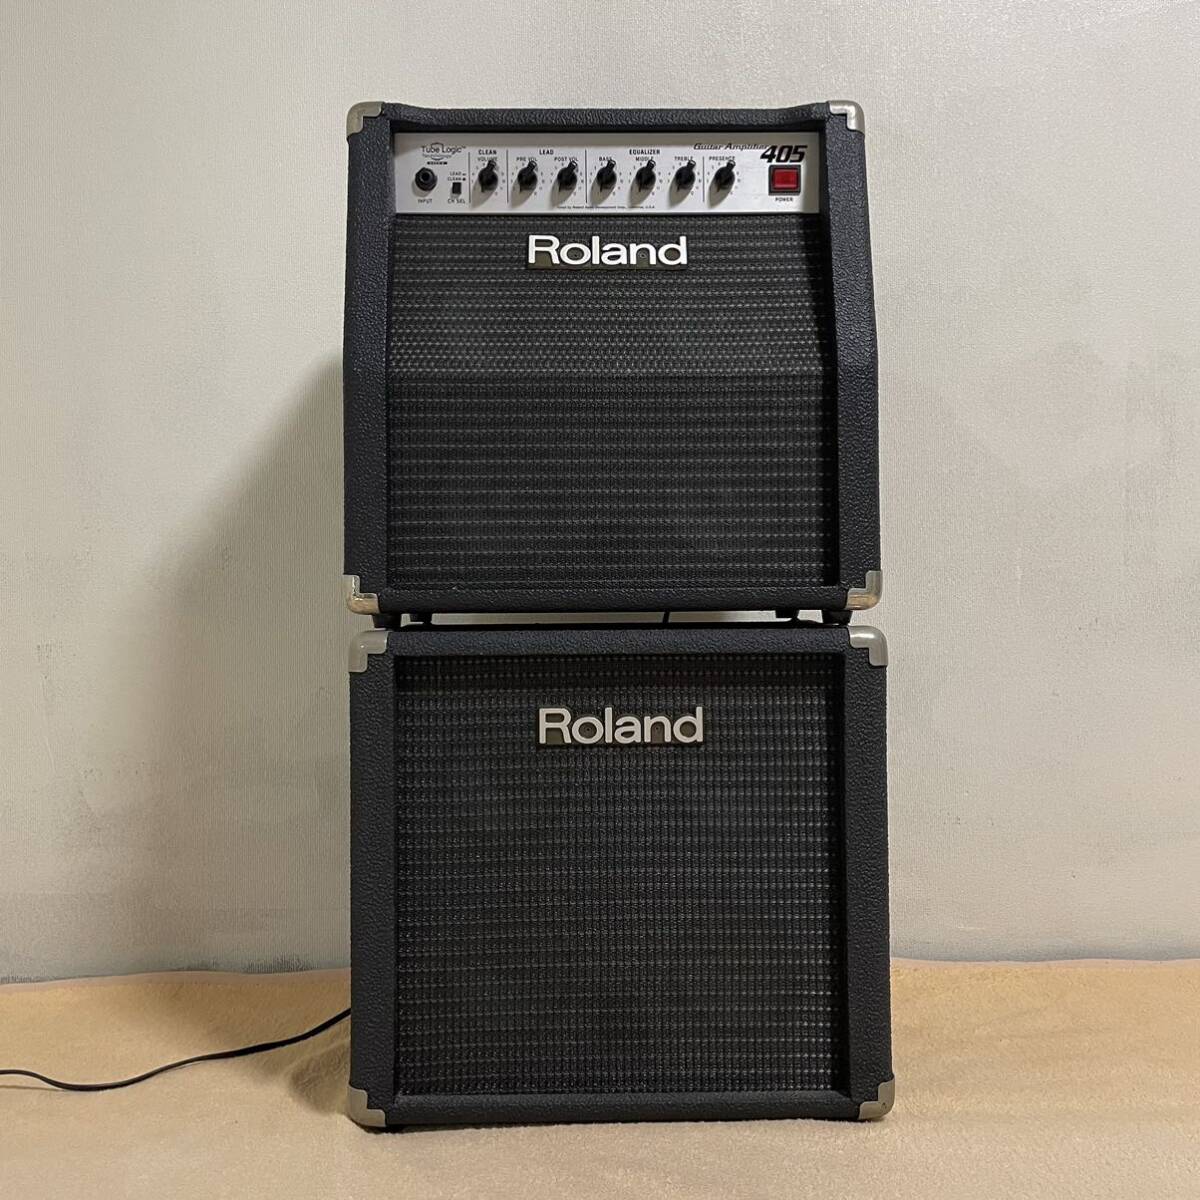 Roland Roland GC-405X guitar amplifier operation verification ending BOSS VAN HALEN Brown sound 